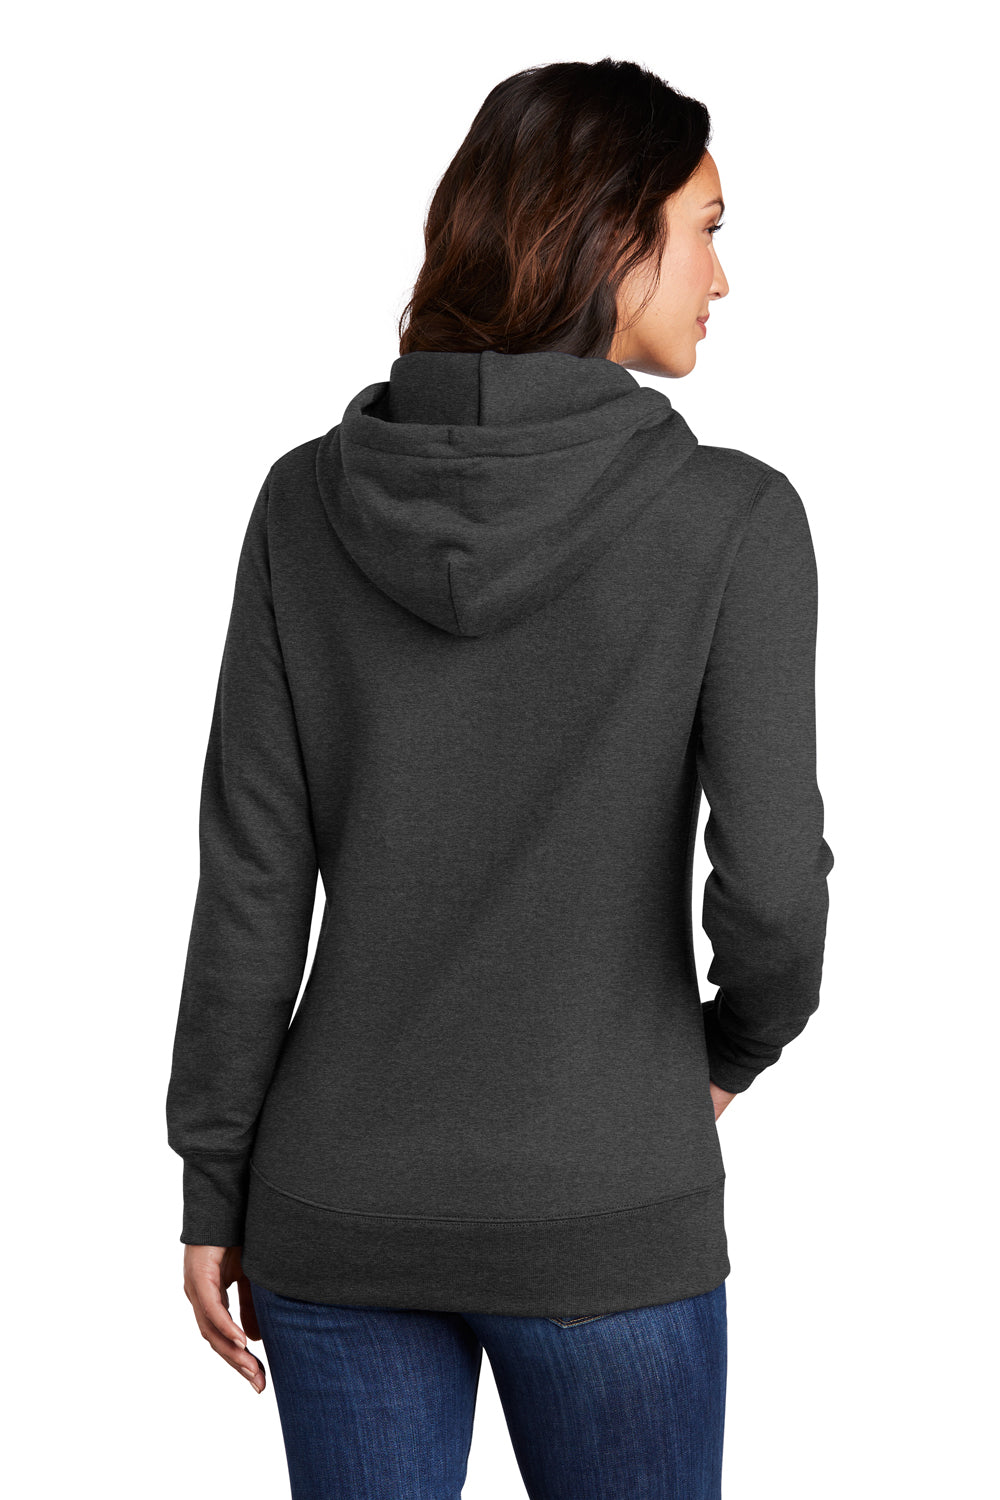 Port & Company Womens Core Fleece Hooded Sweatshirt Hoodie Heather Dark Grey Side